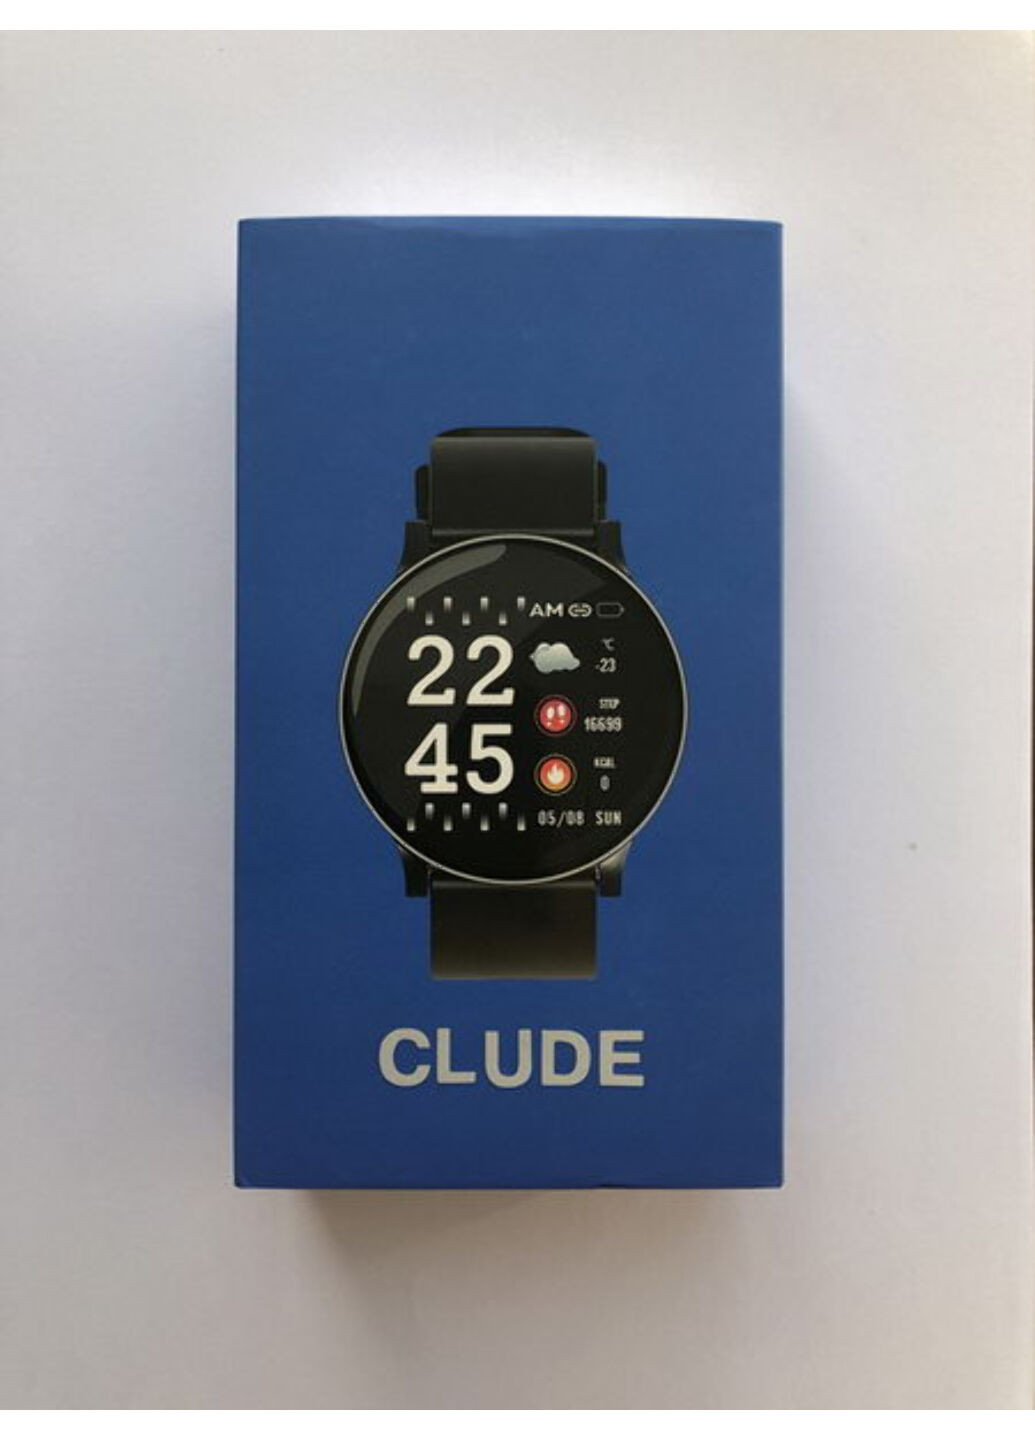 Смарт-часы Clude swo1014b red (256650758)